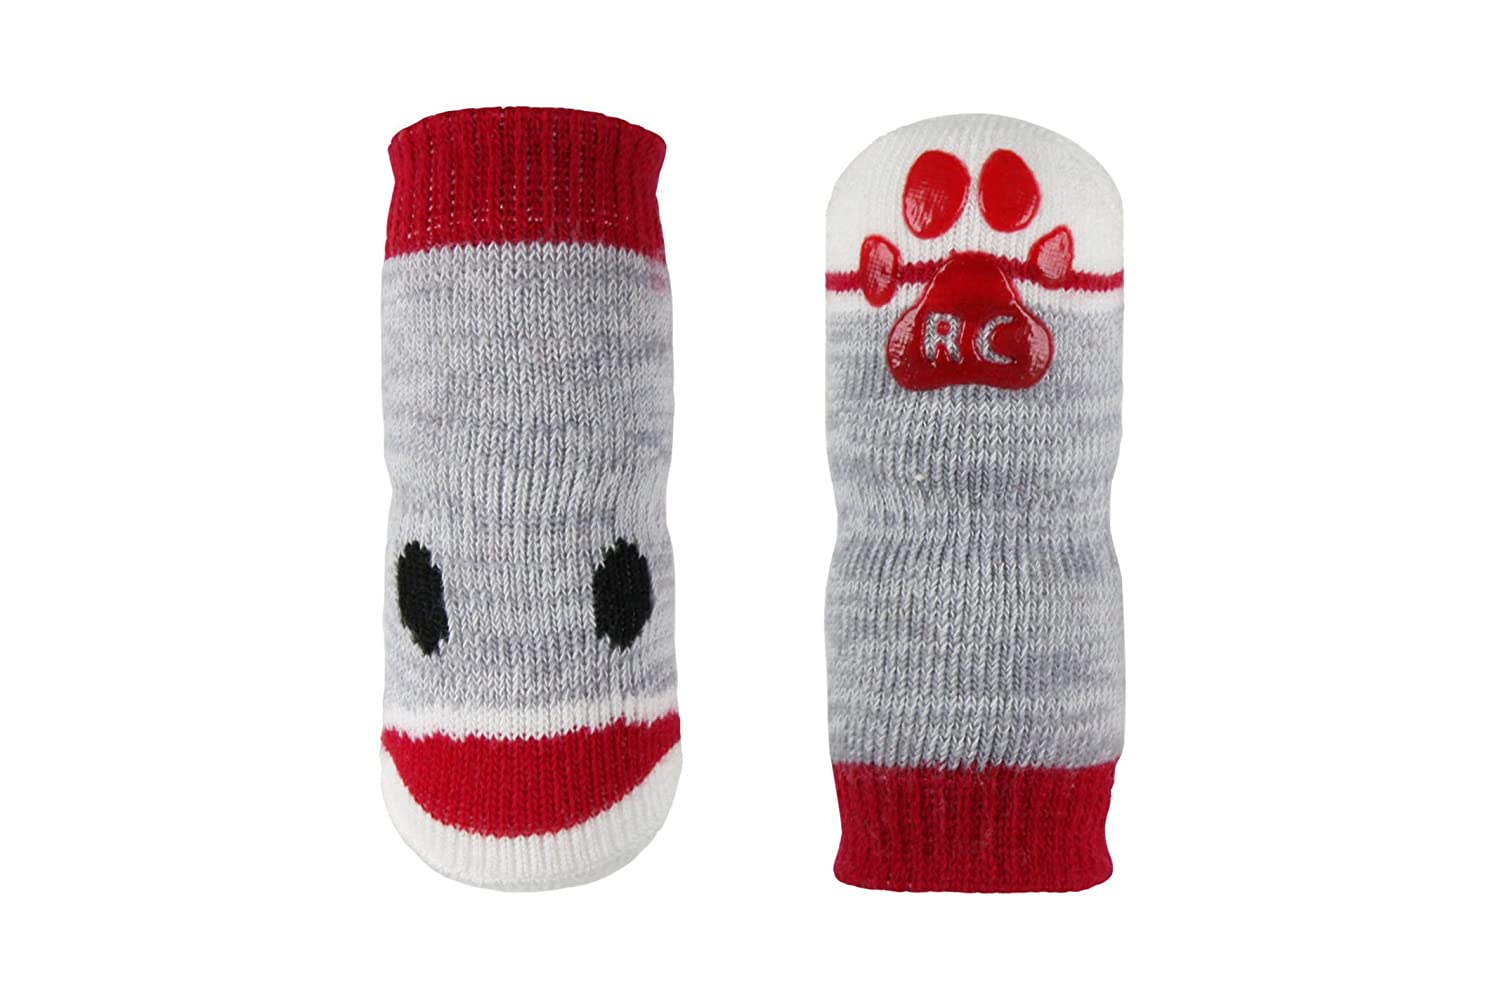 RC Pet Products Pawks Dog Socks